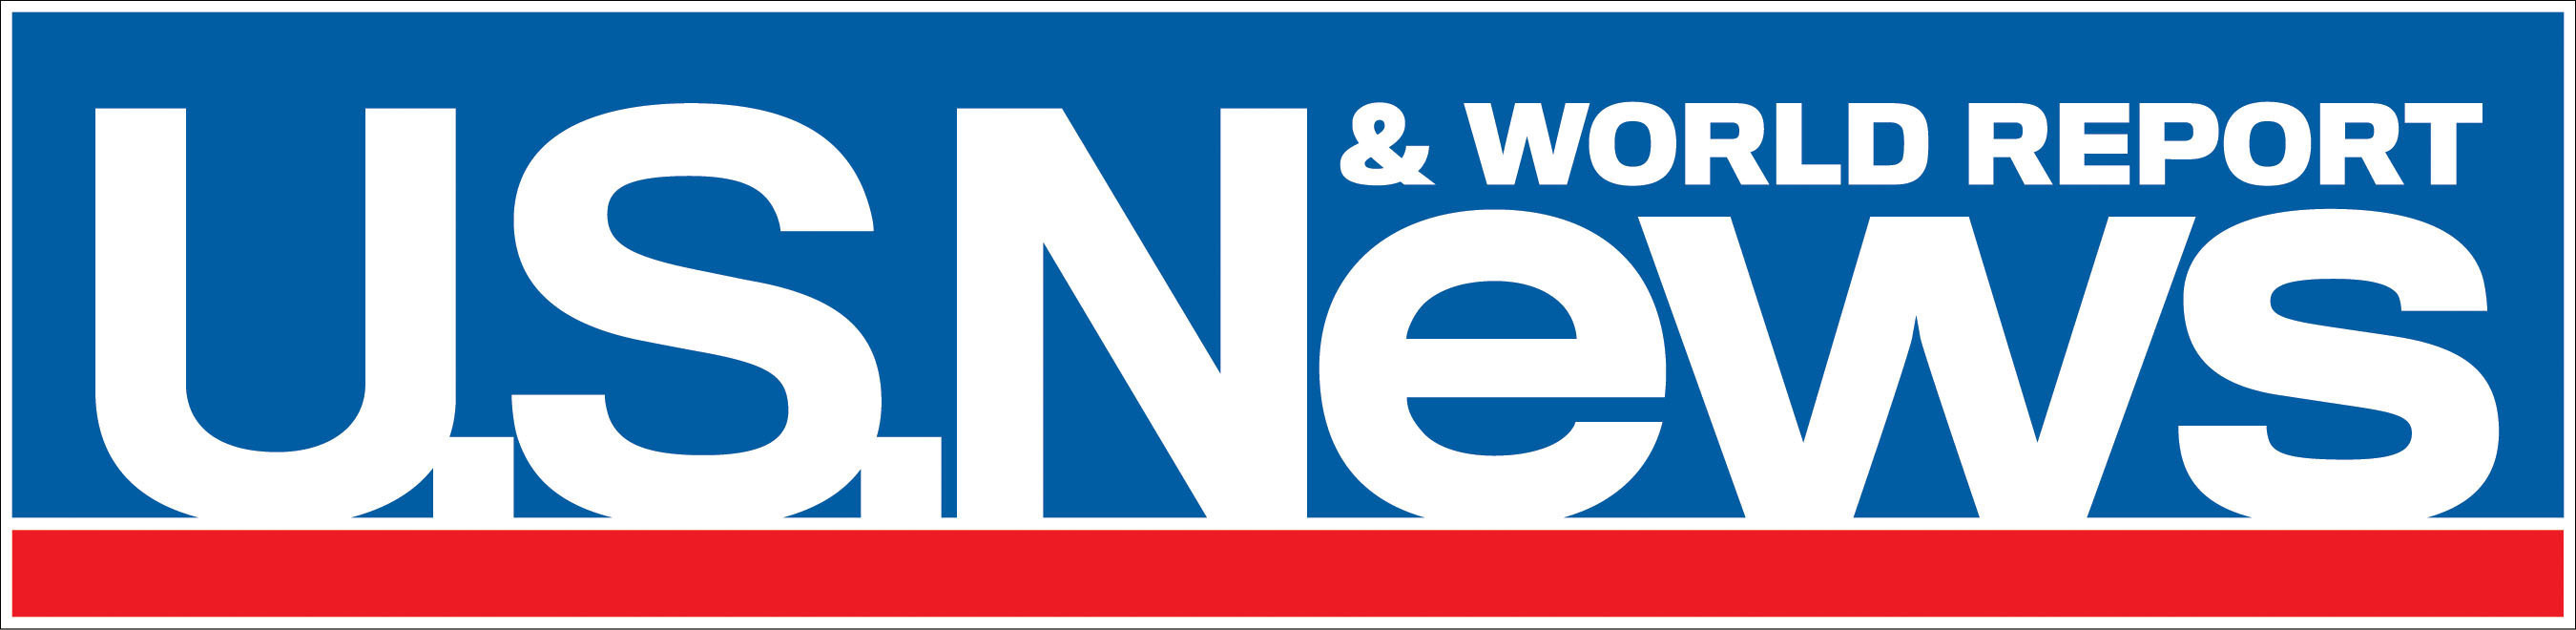 Image result for u.s. news & world report logo